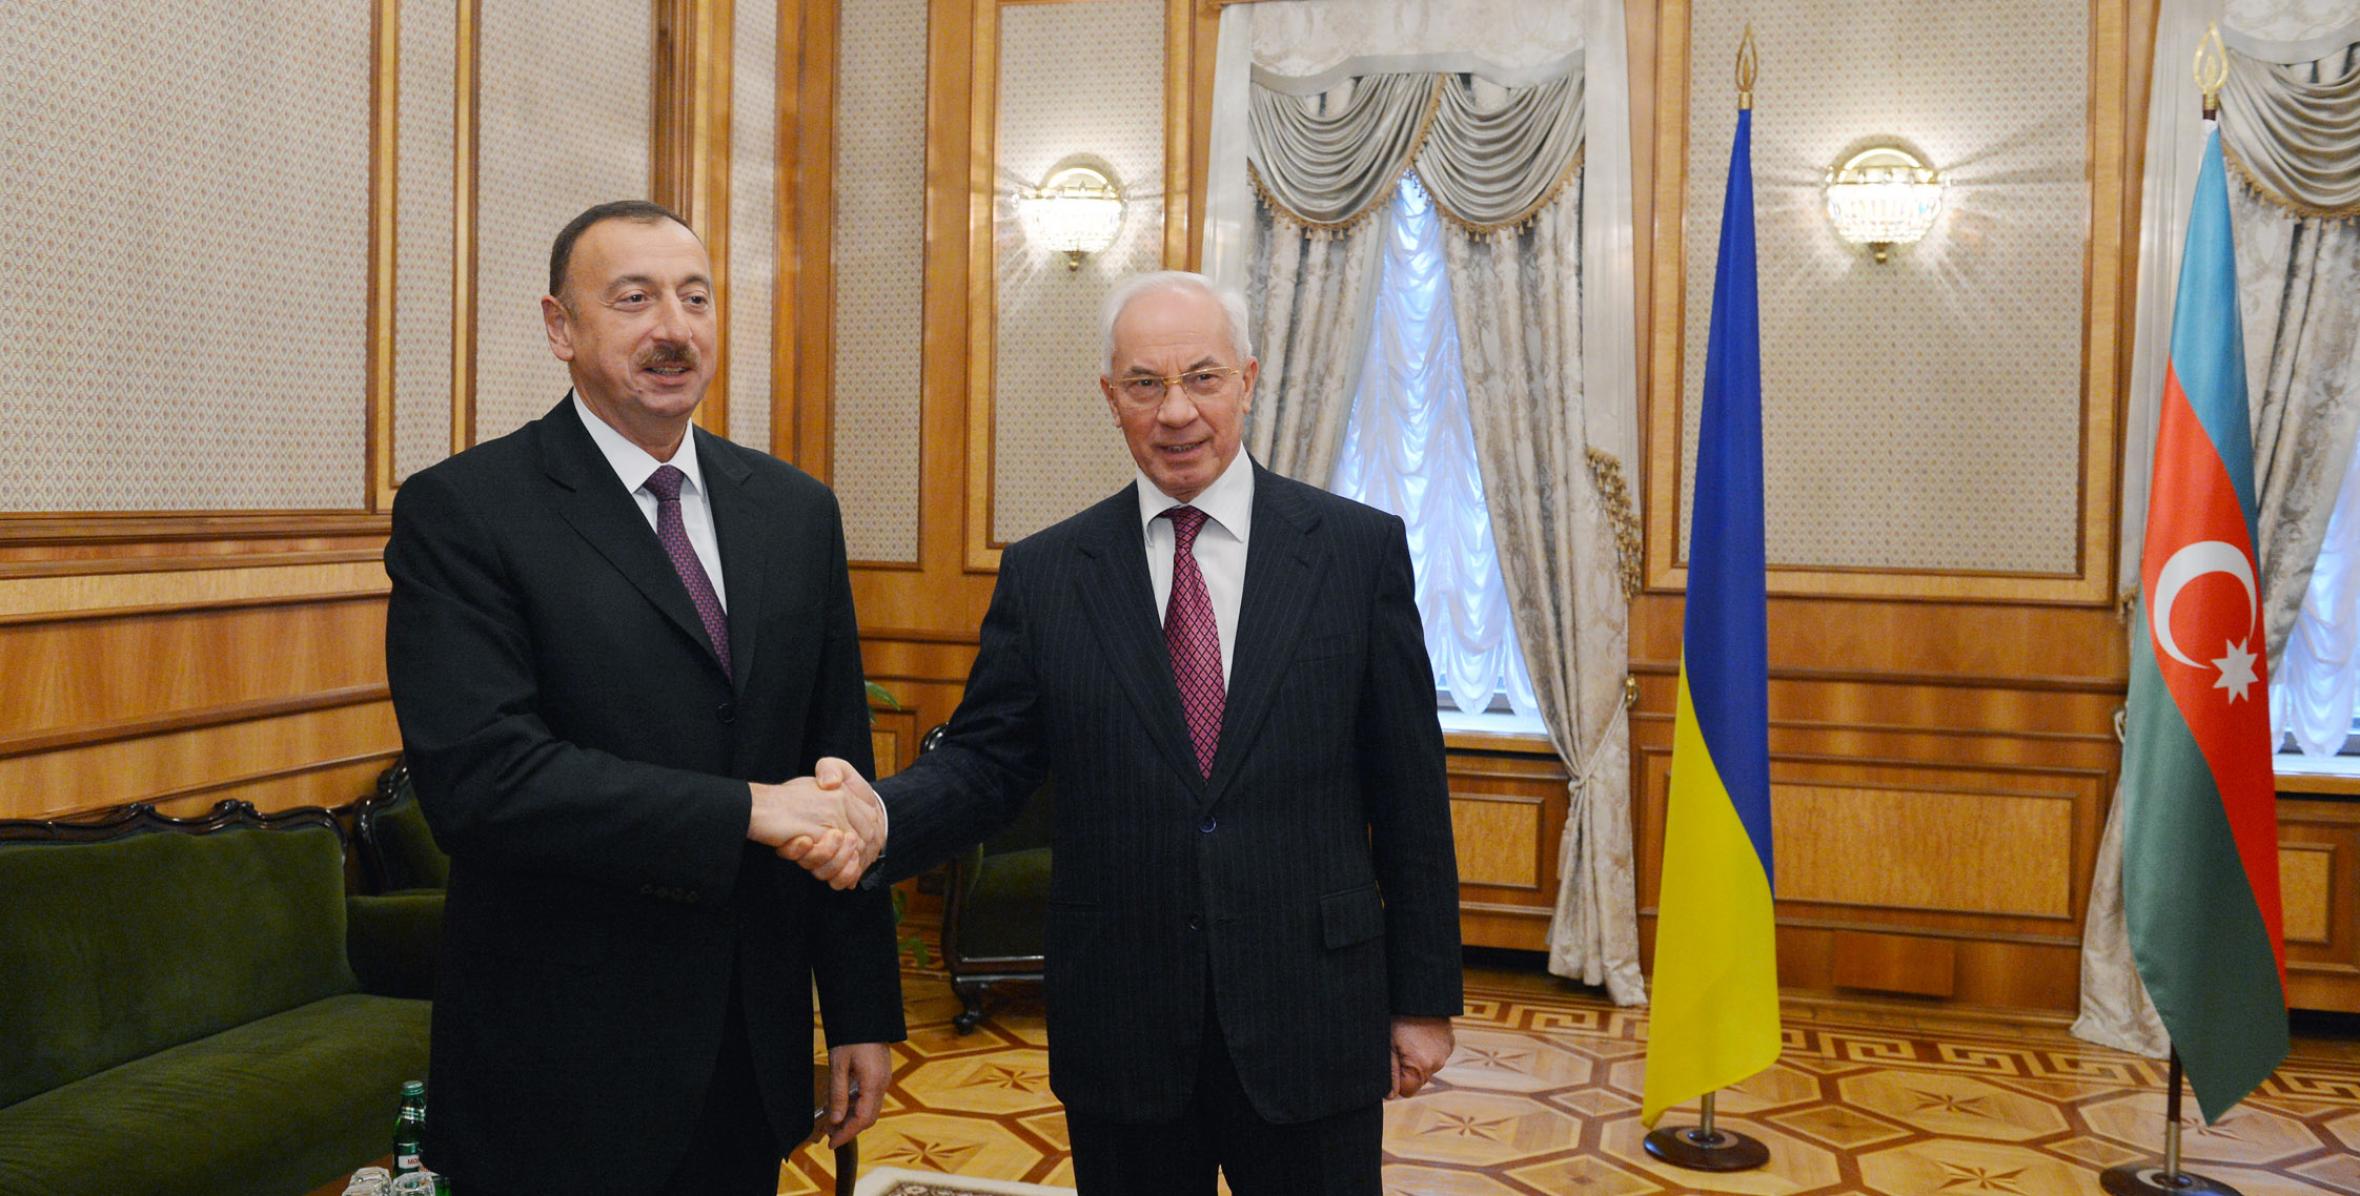 Ilham Aliyev met with Ukrainian Prime Minister Mykola Azarov